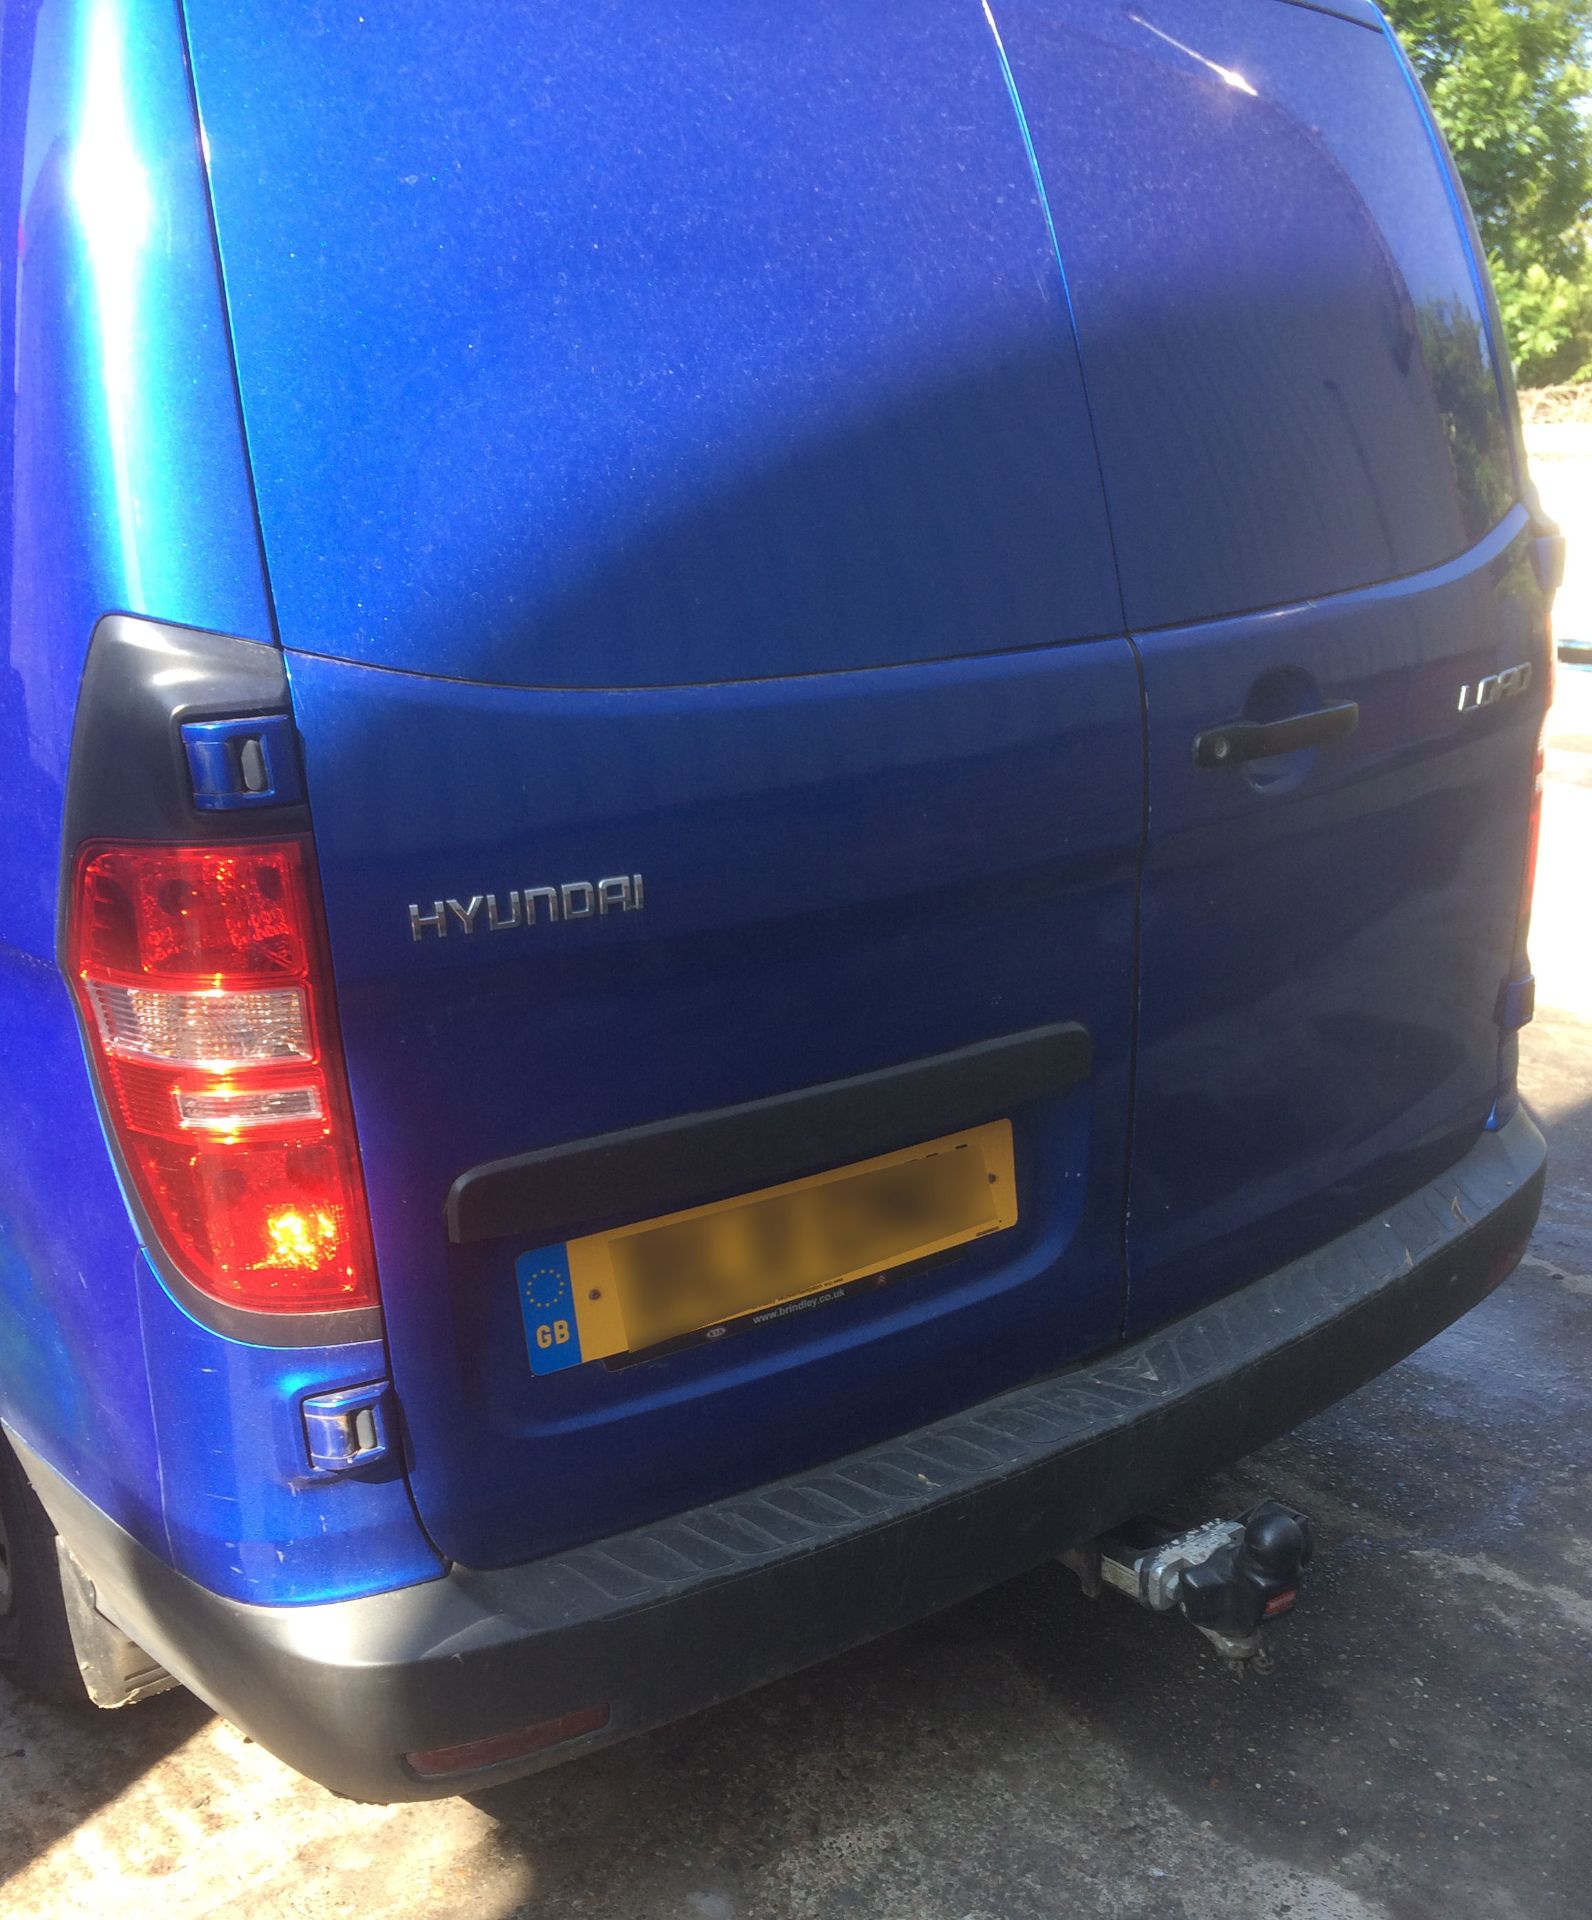 1 x 2011 Hyundai iLoad Van - 1 Year MOT, 175000 Miles, Blue - CL303 - Location: North Wales - Image 6 of 8